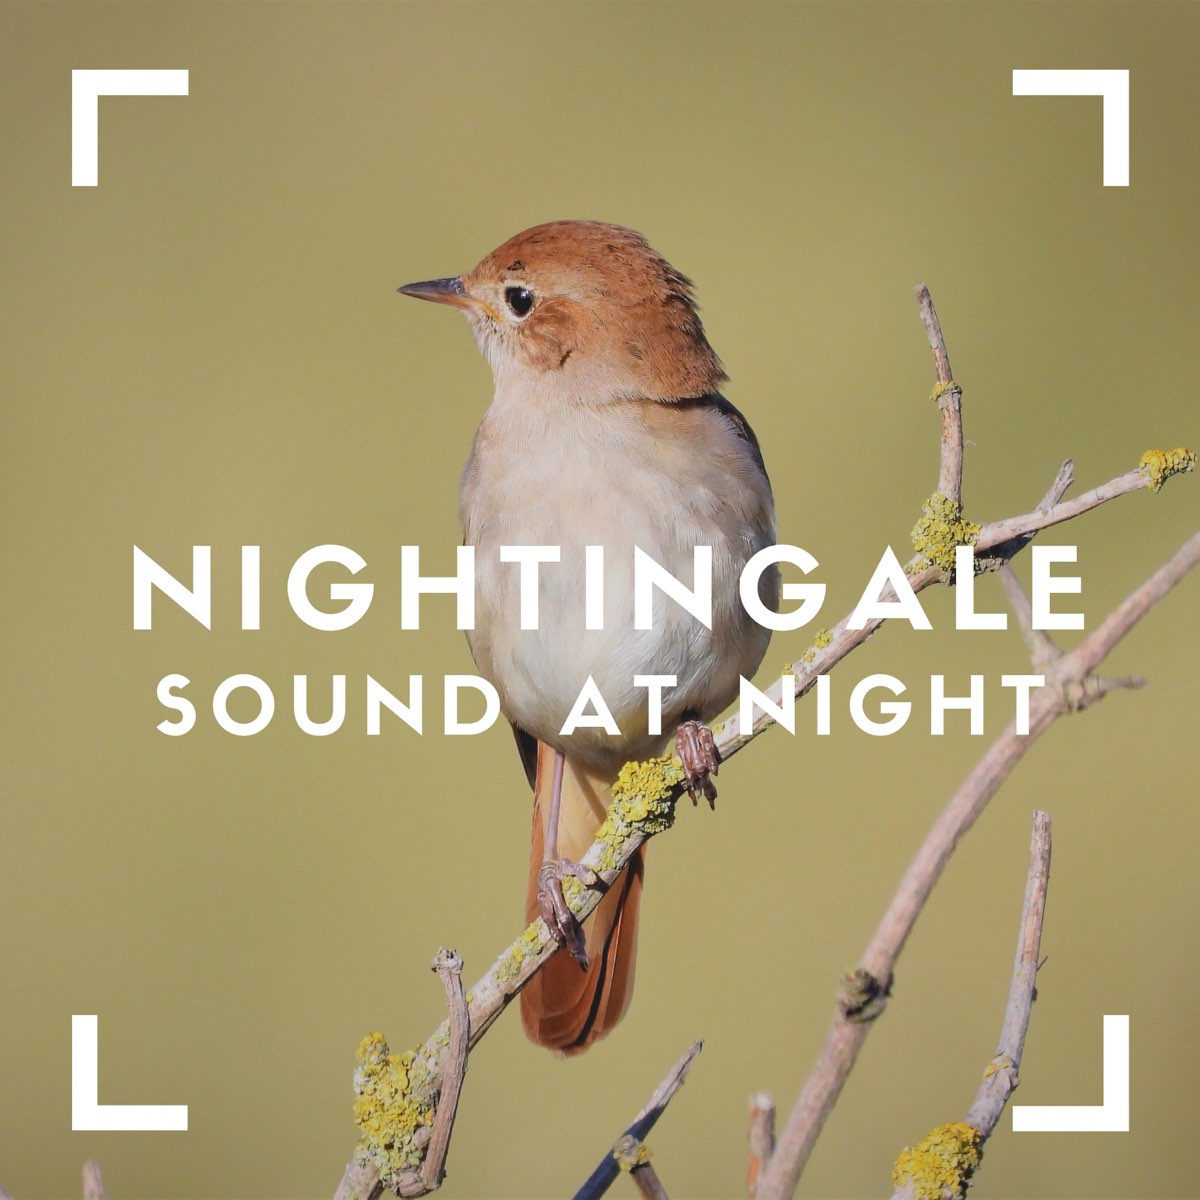 BEST NIGHTINGALE SONG - 3 Hours REALTIME Nightingale Singing, NO